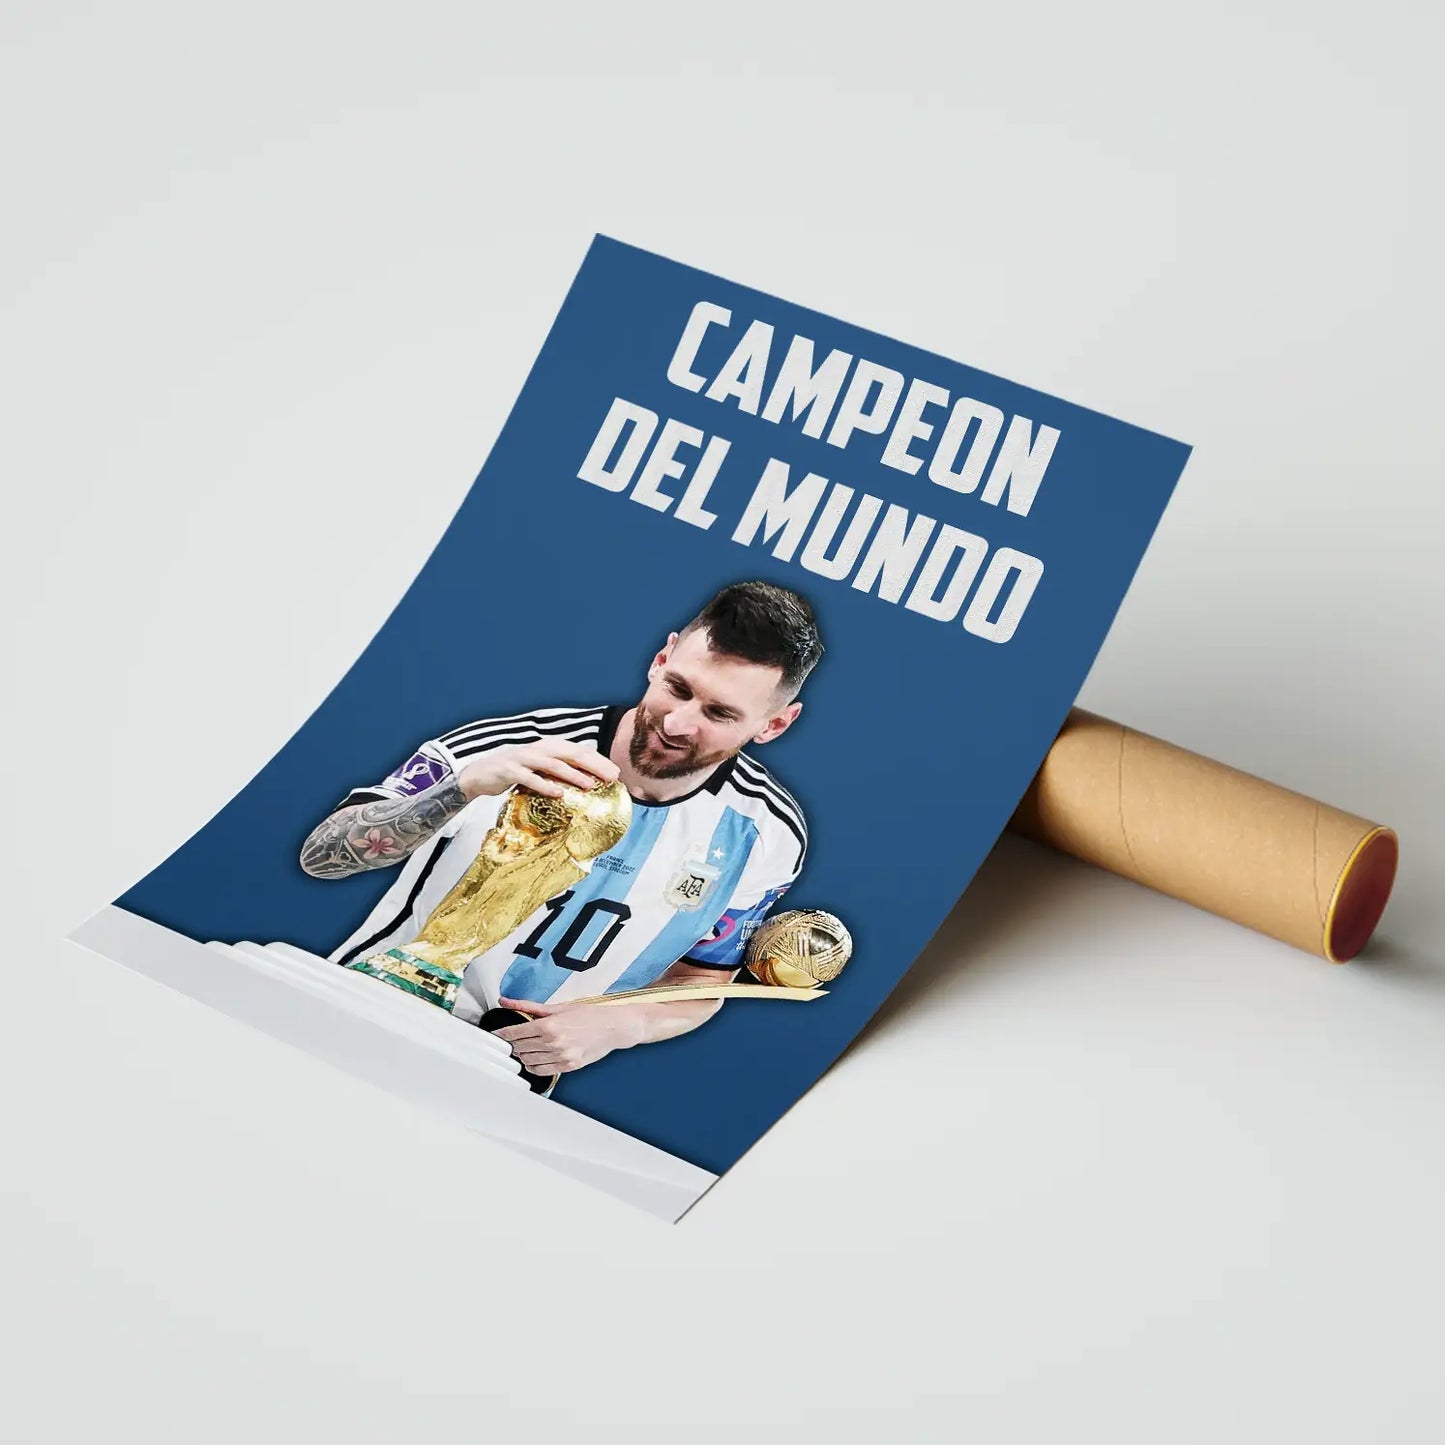 Messi - Campeon Del Mundo Poster | Frame | Canvas